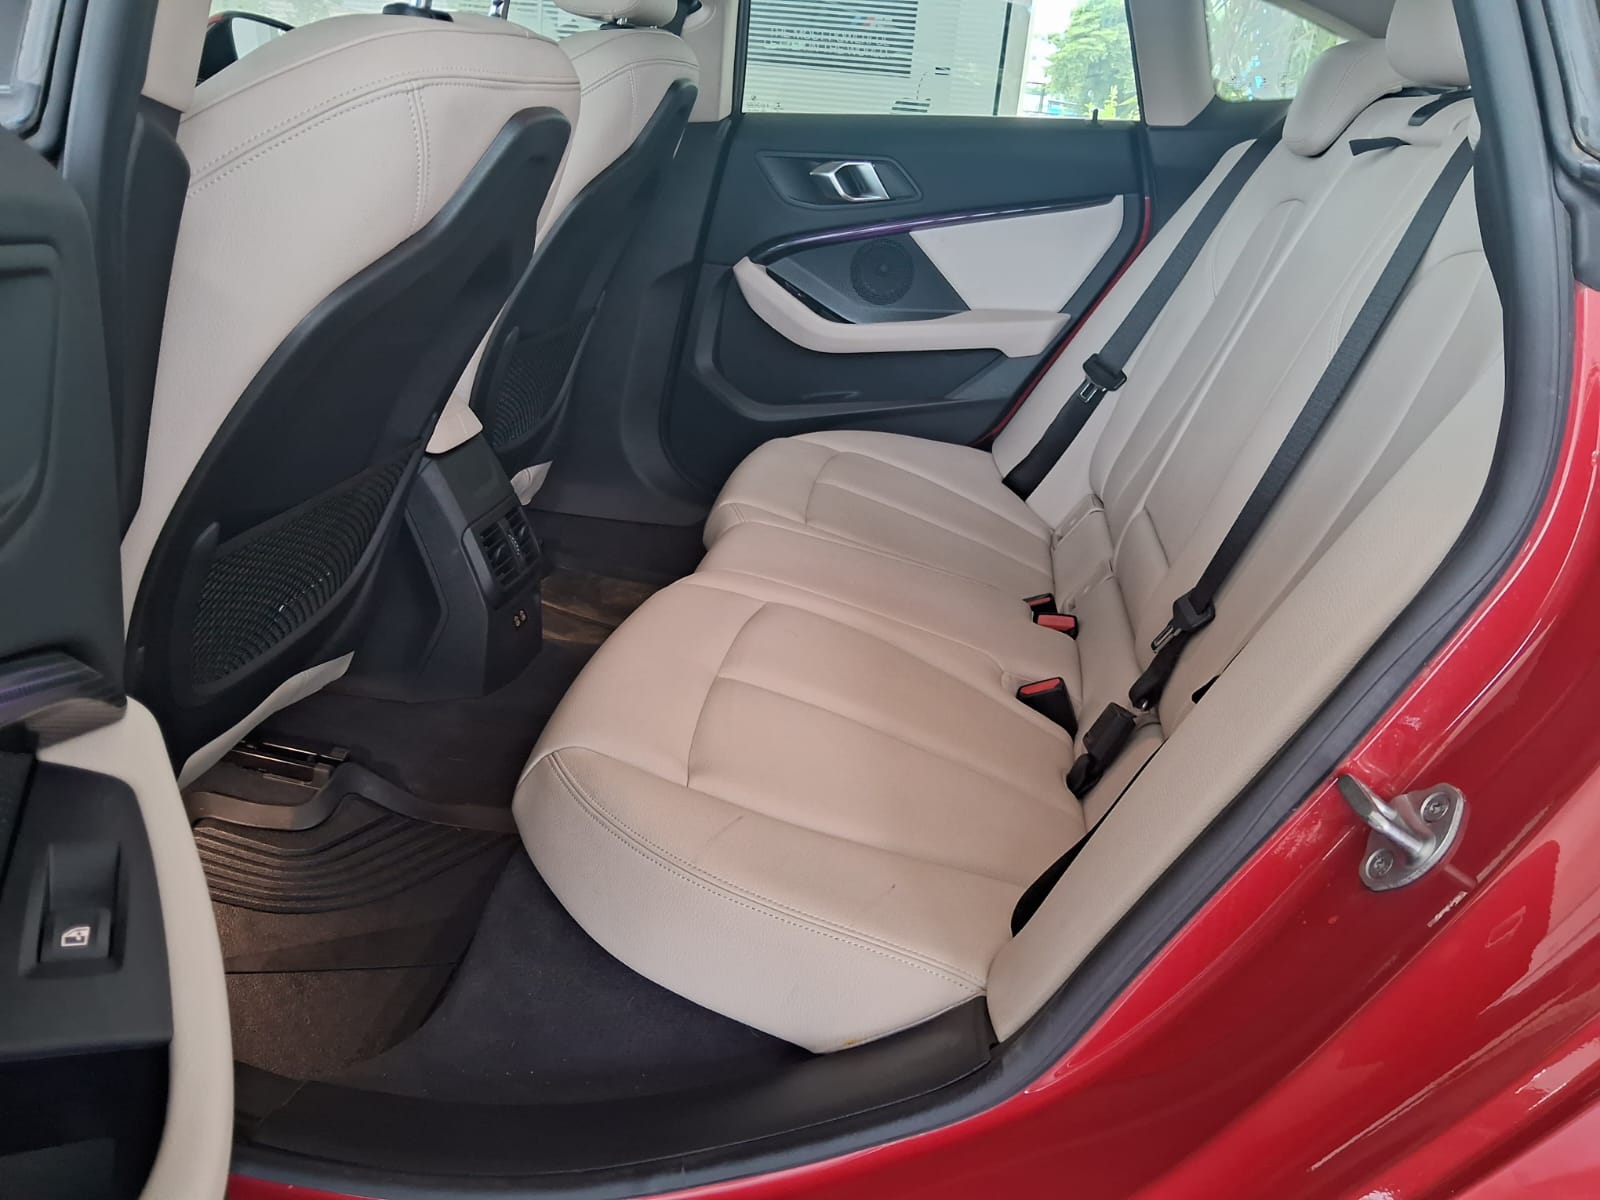 BMW 220d coupe sportline back seat